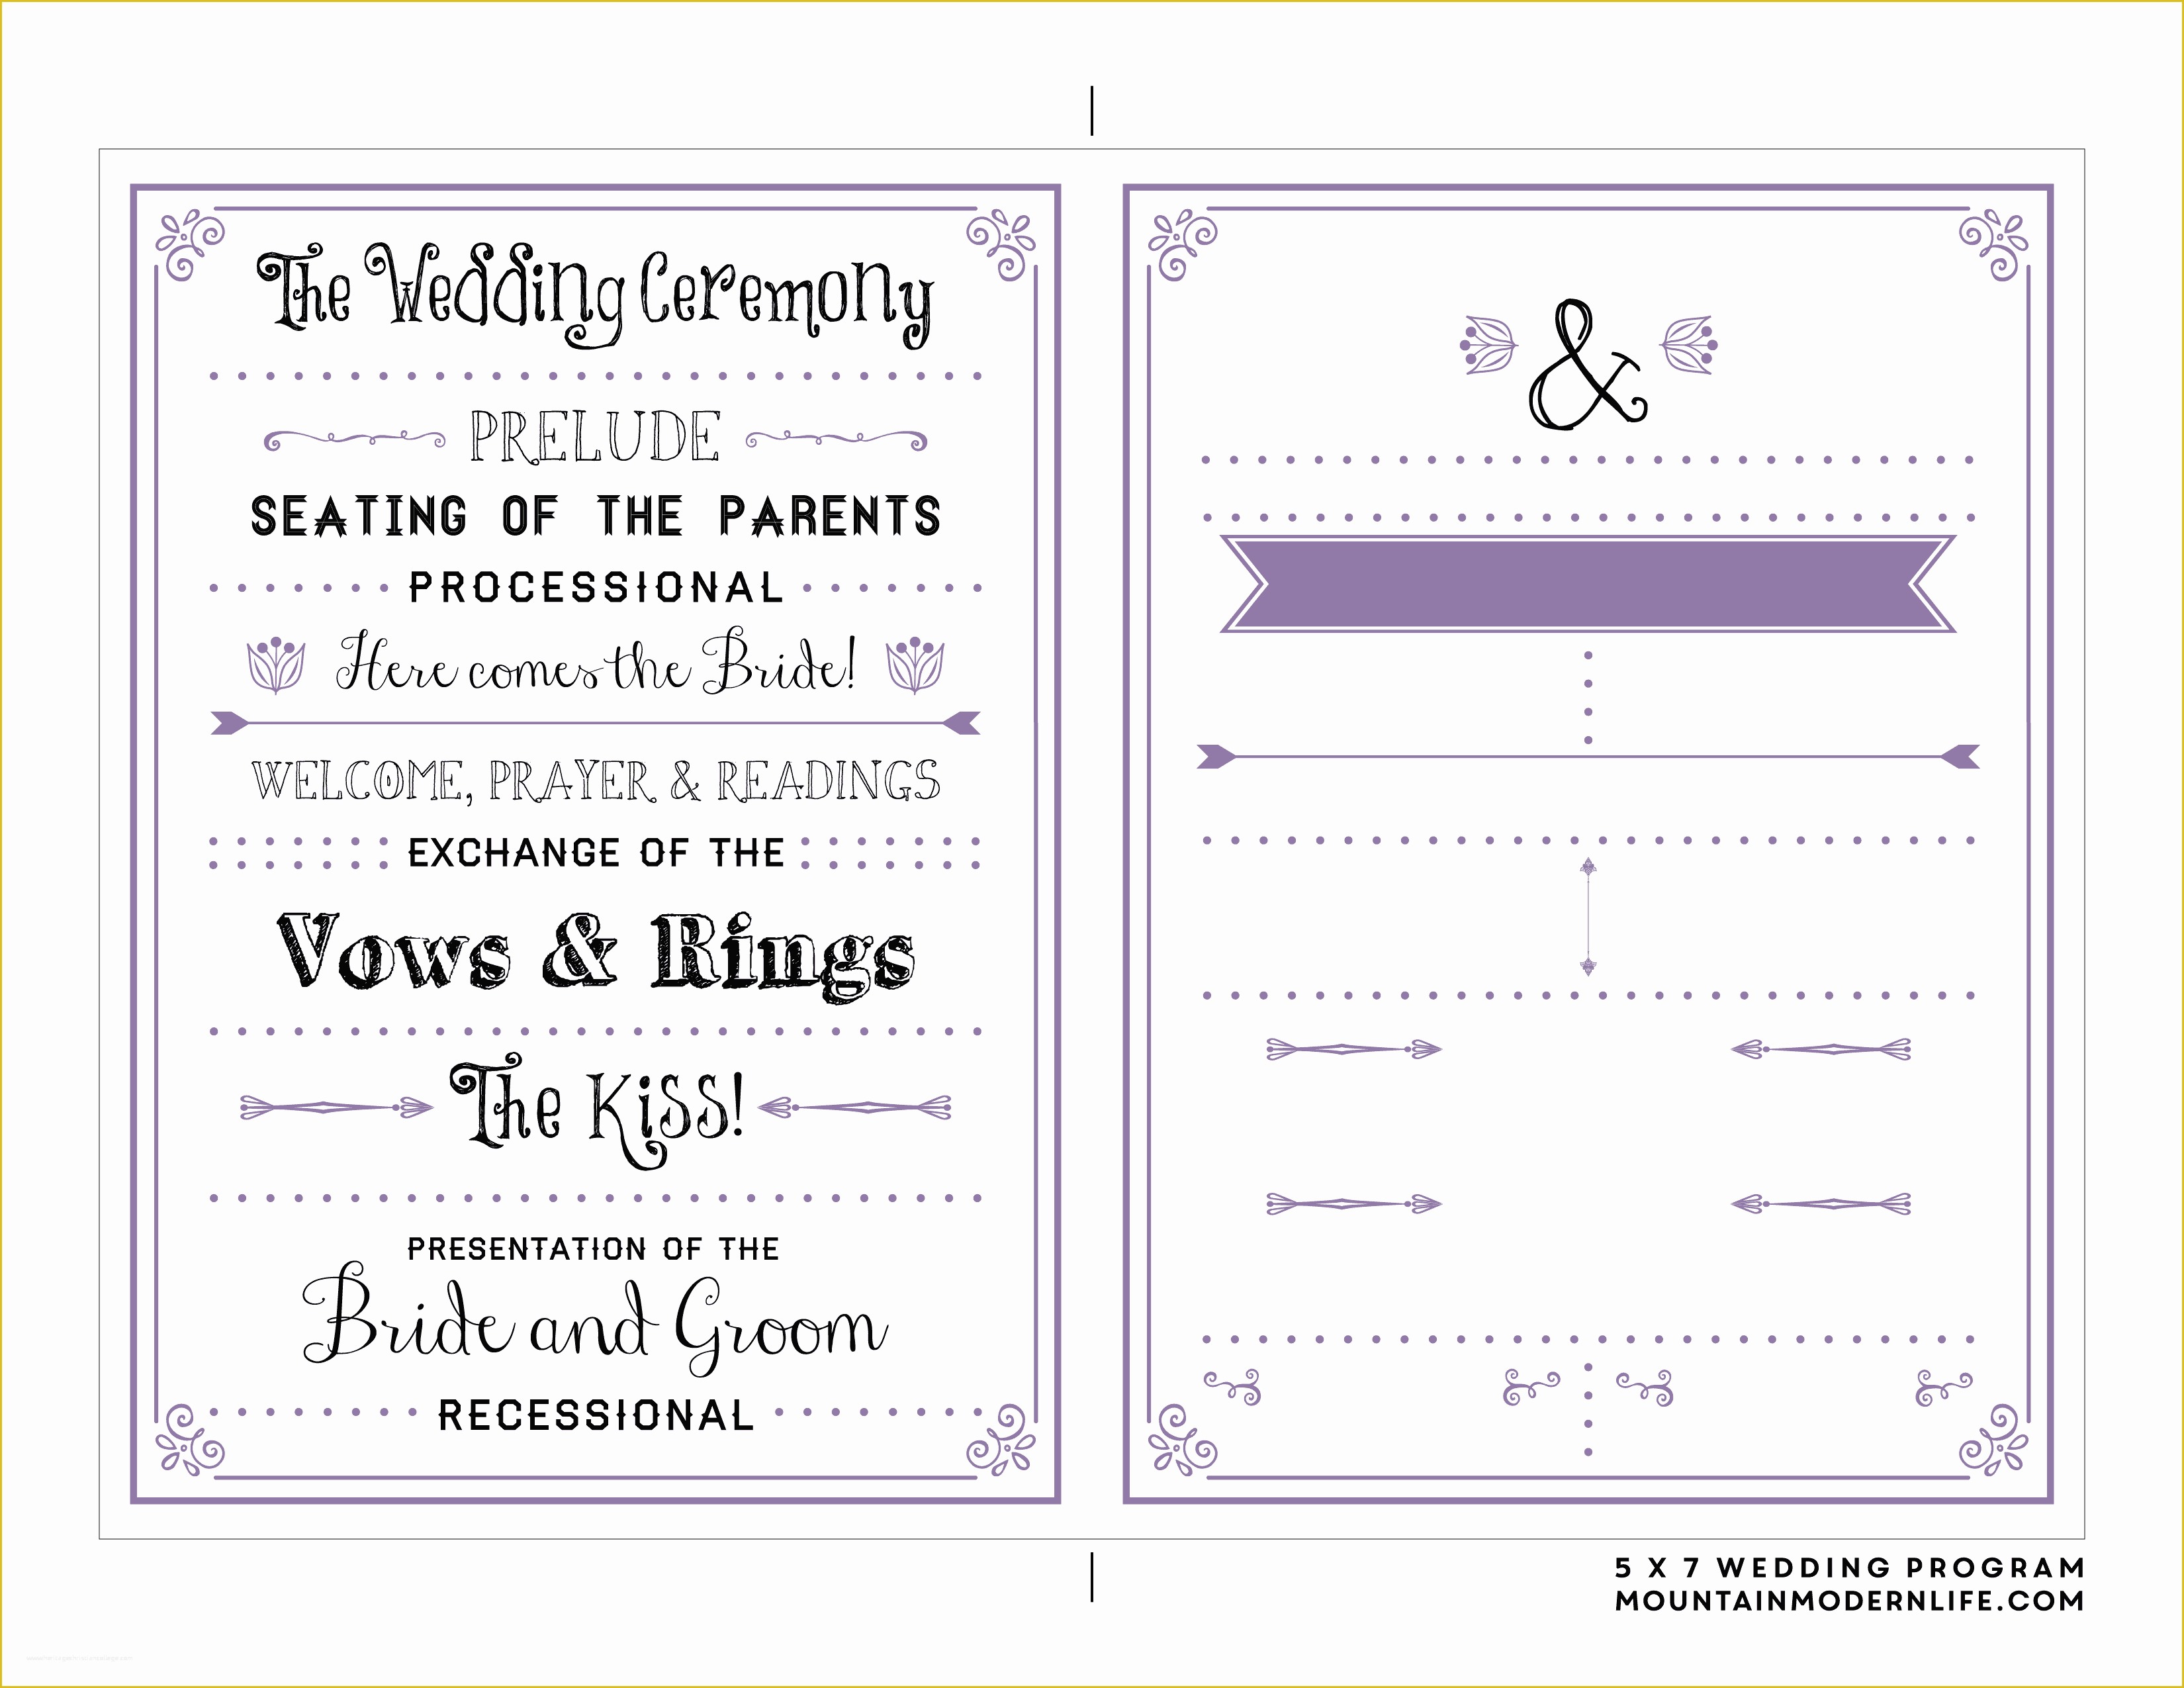 Free Downloadable Wedding Program Templates Of Free Printable Wedding Program